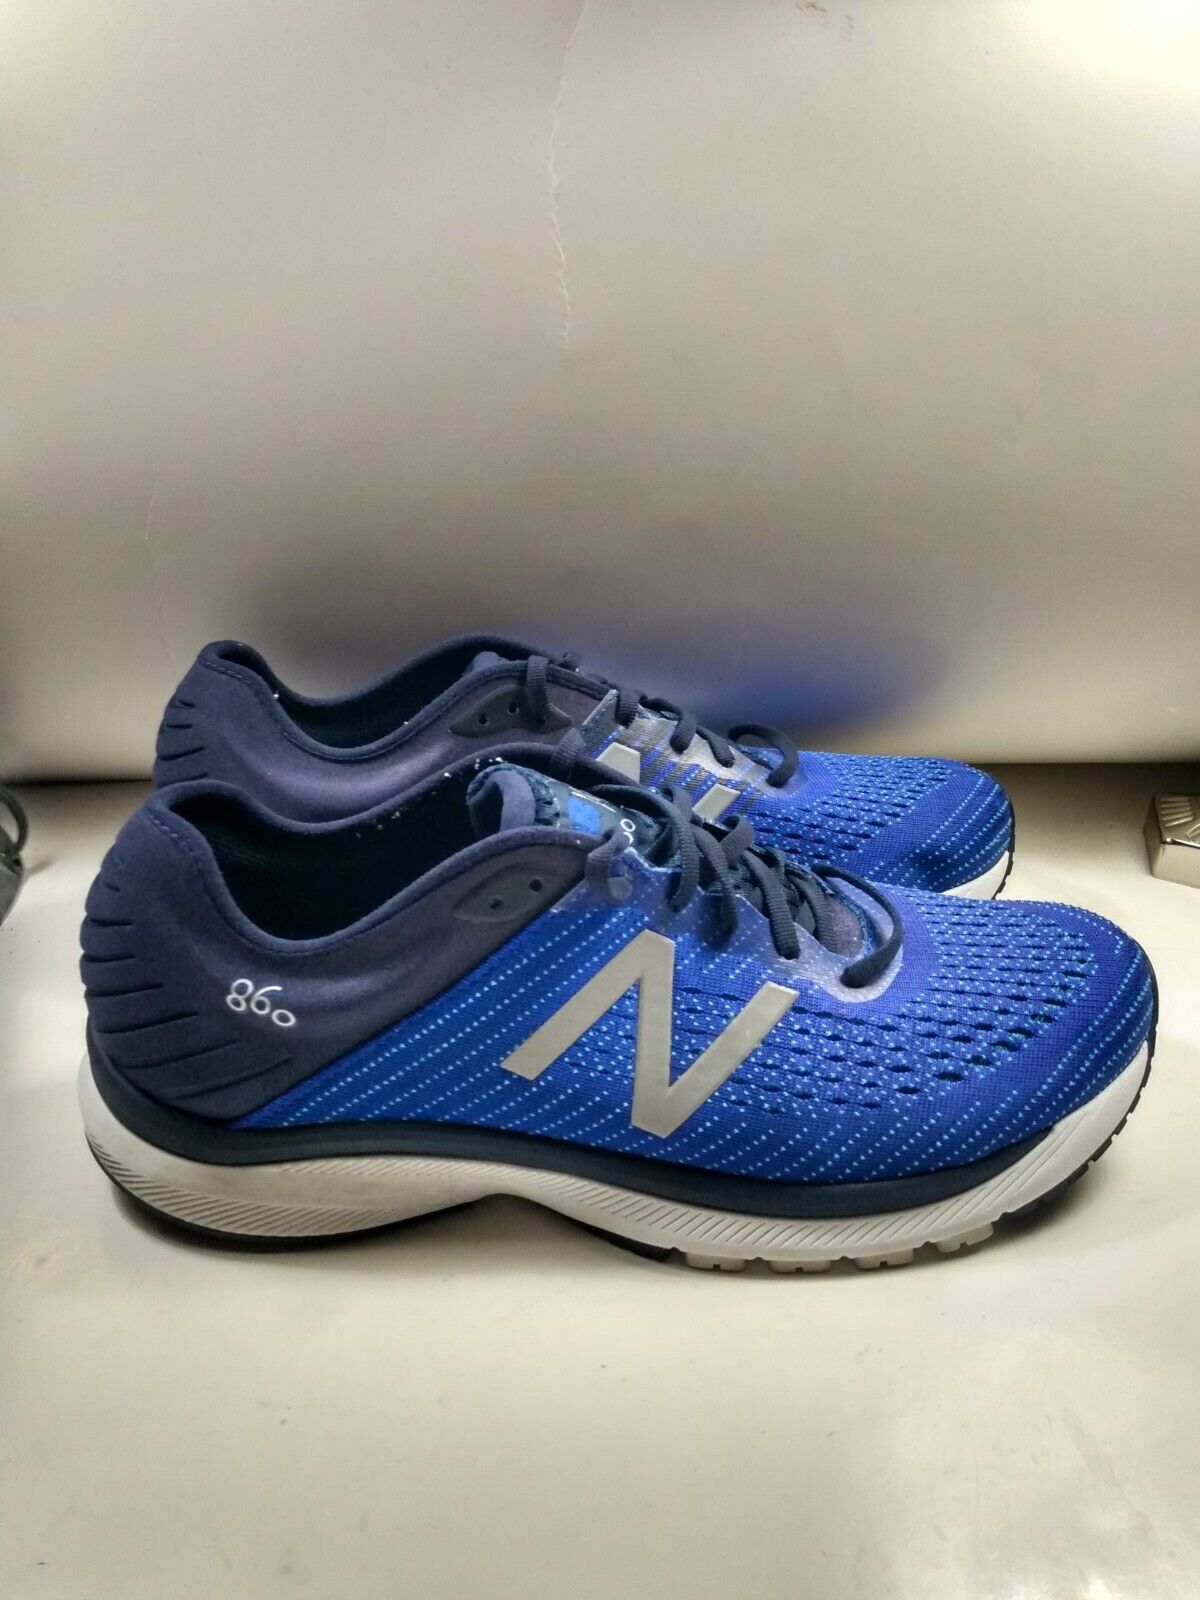 New Balance 860v10 Running Shoes Men's sz 13D for Sale - ScienceAGogo